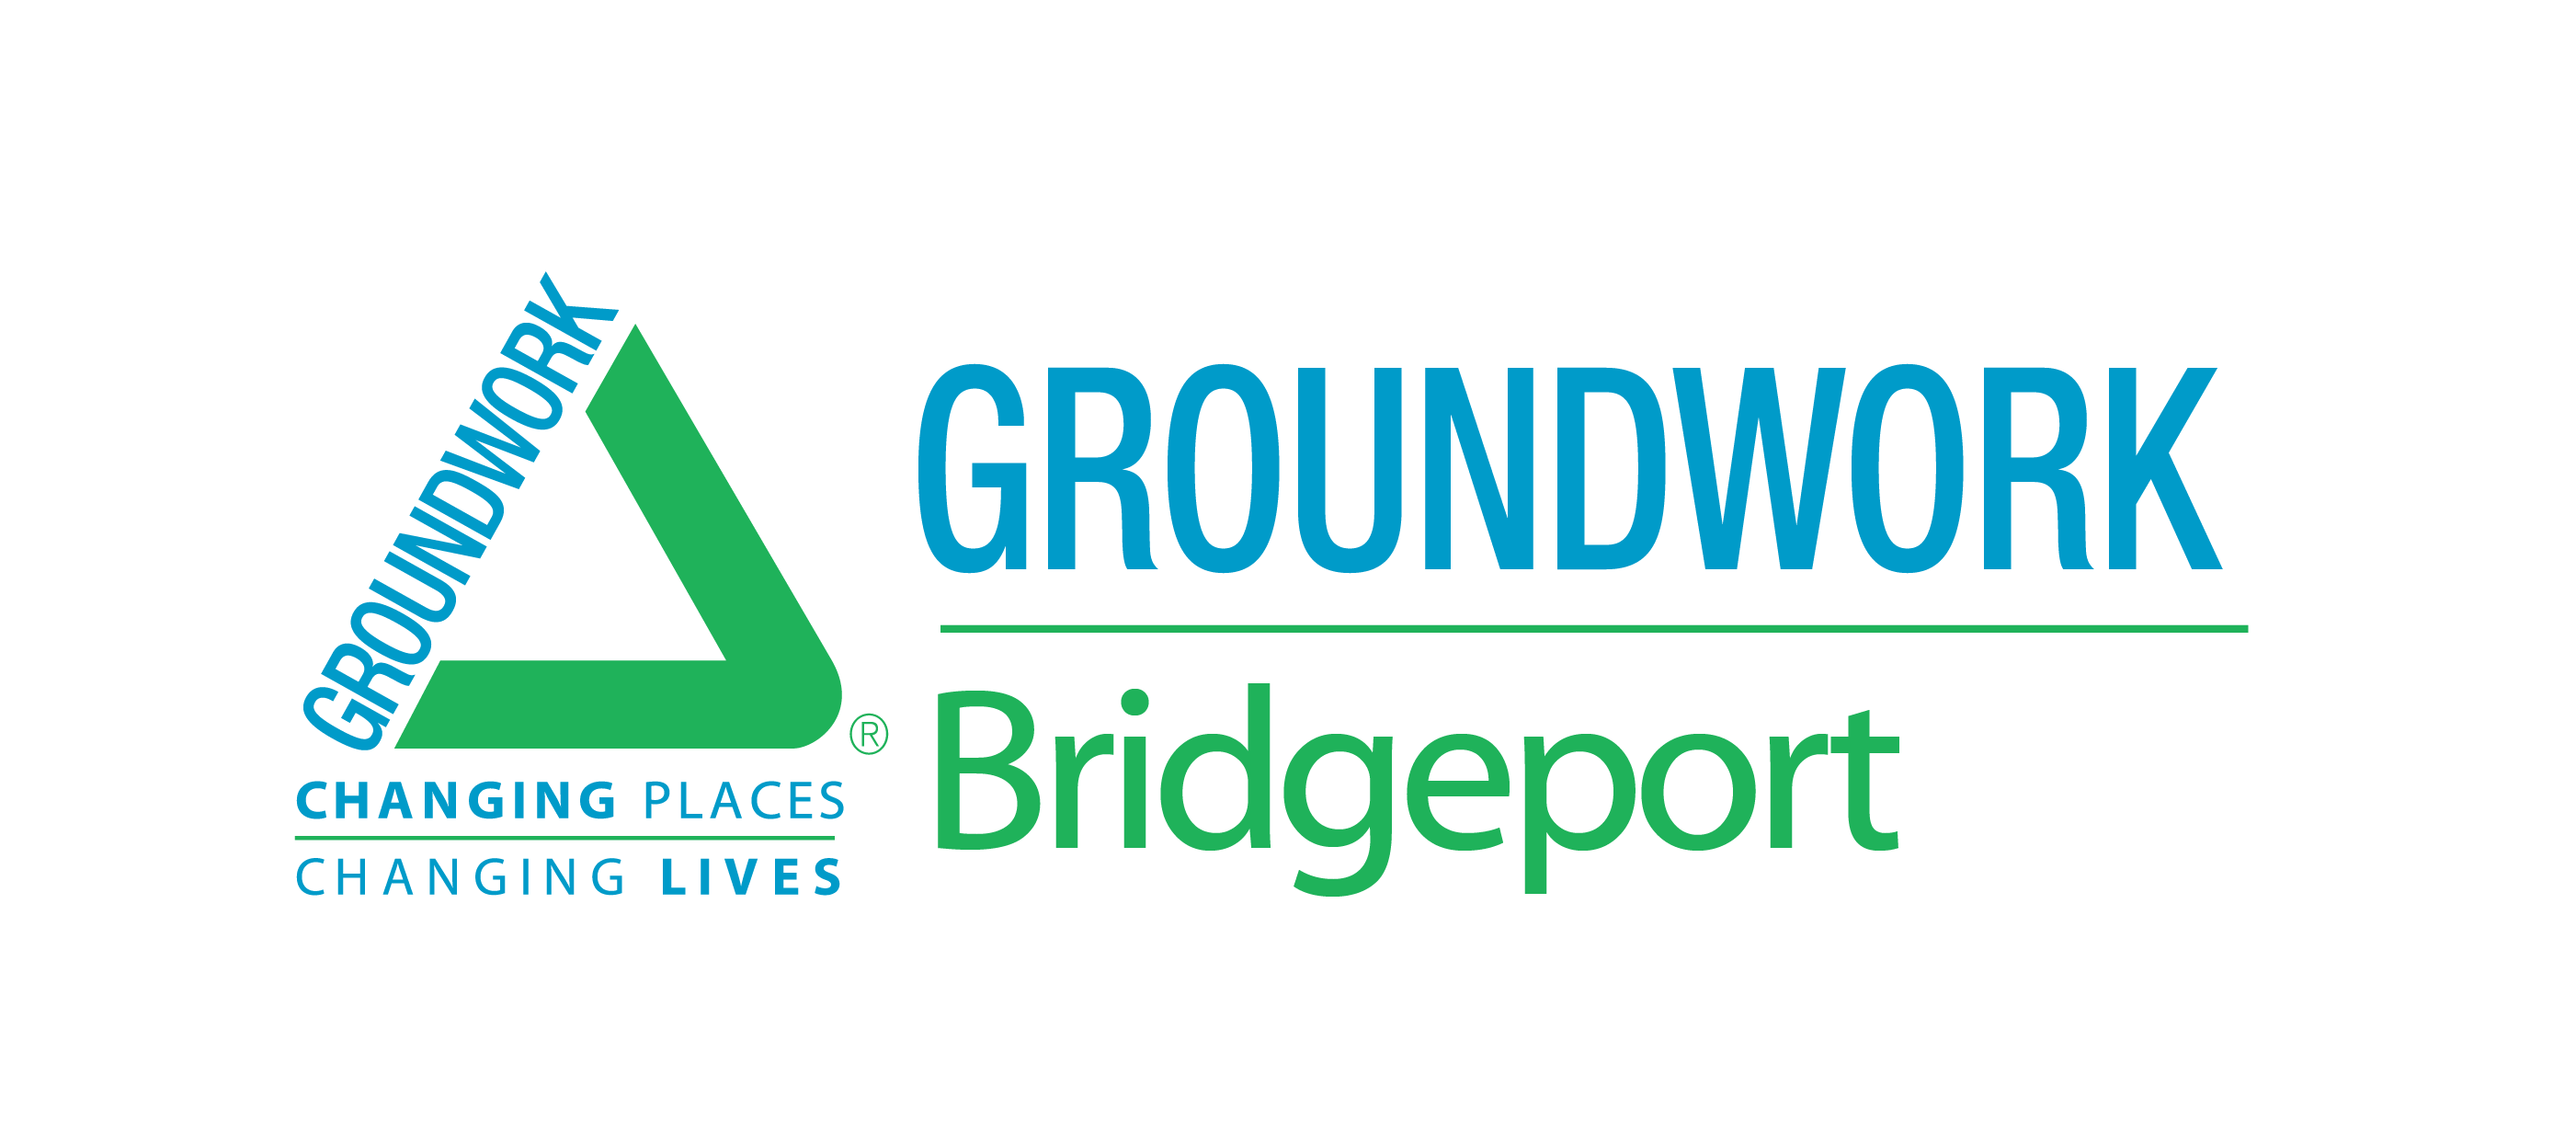 Groundwork Bridgeport logo